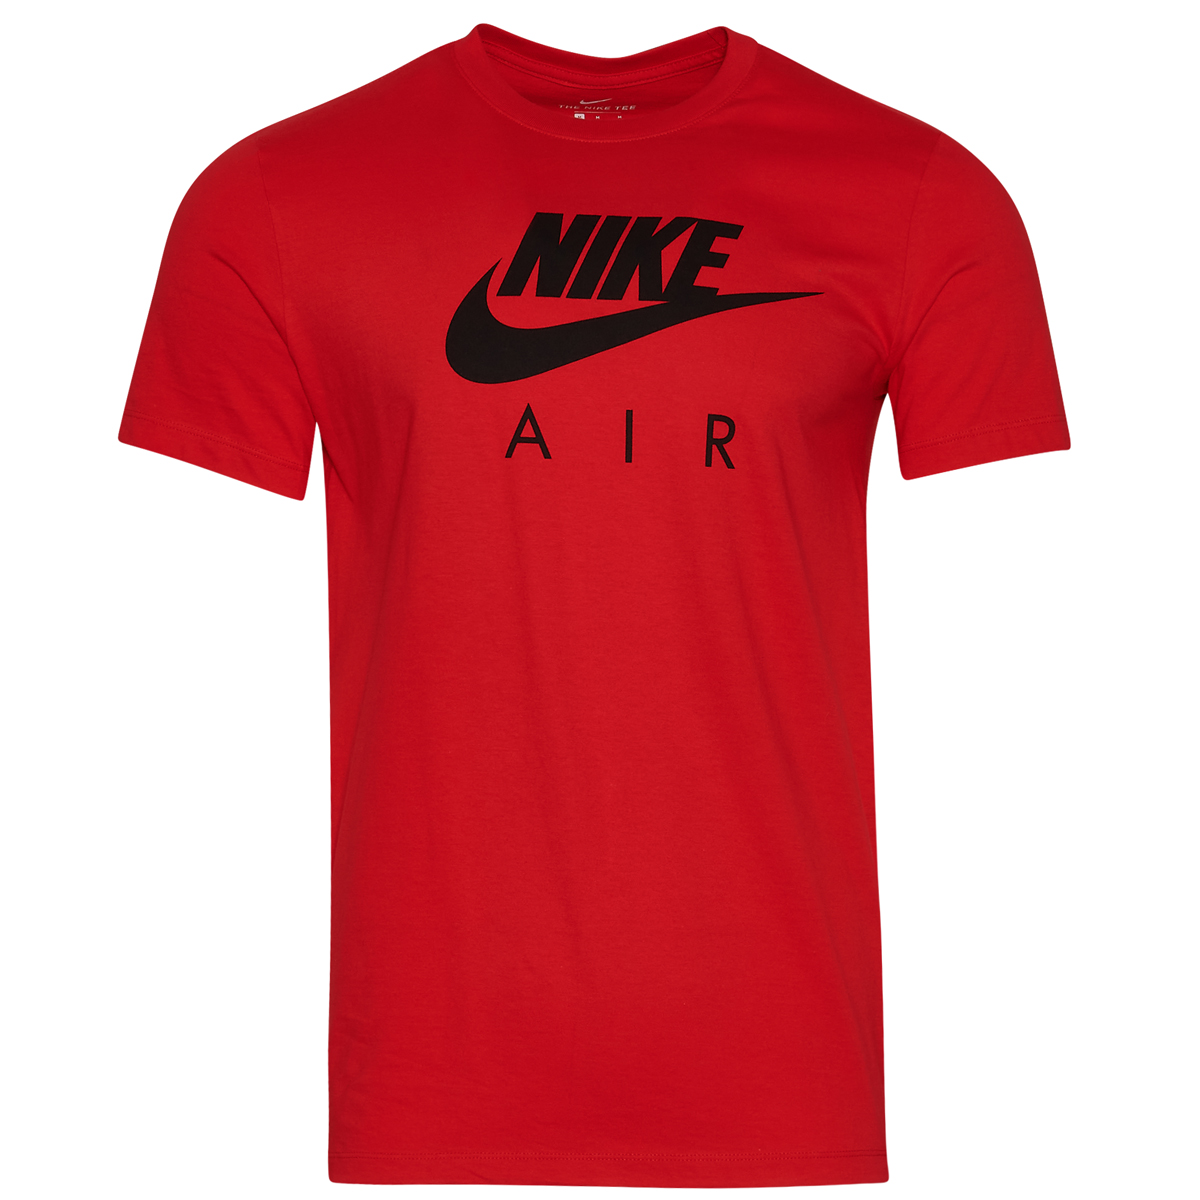 Nike-Air-T-Shirt-Red-Black